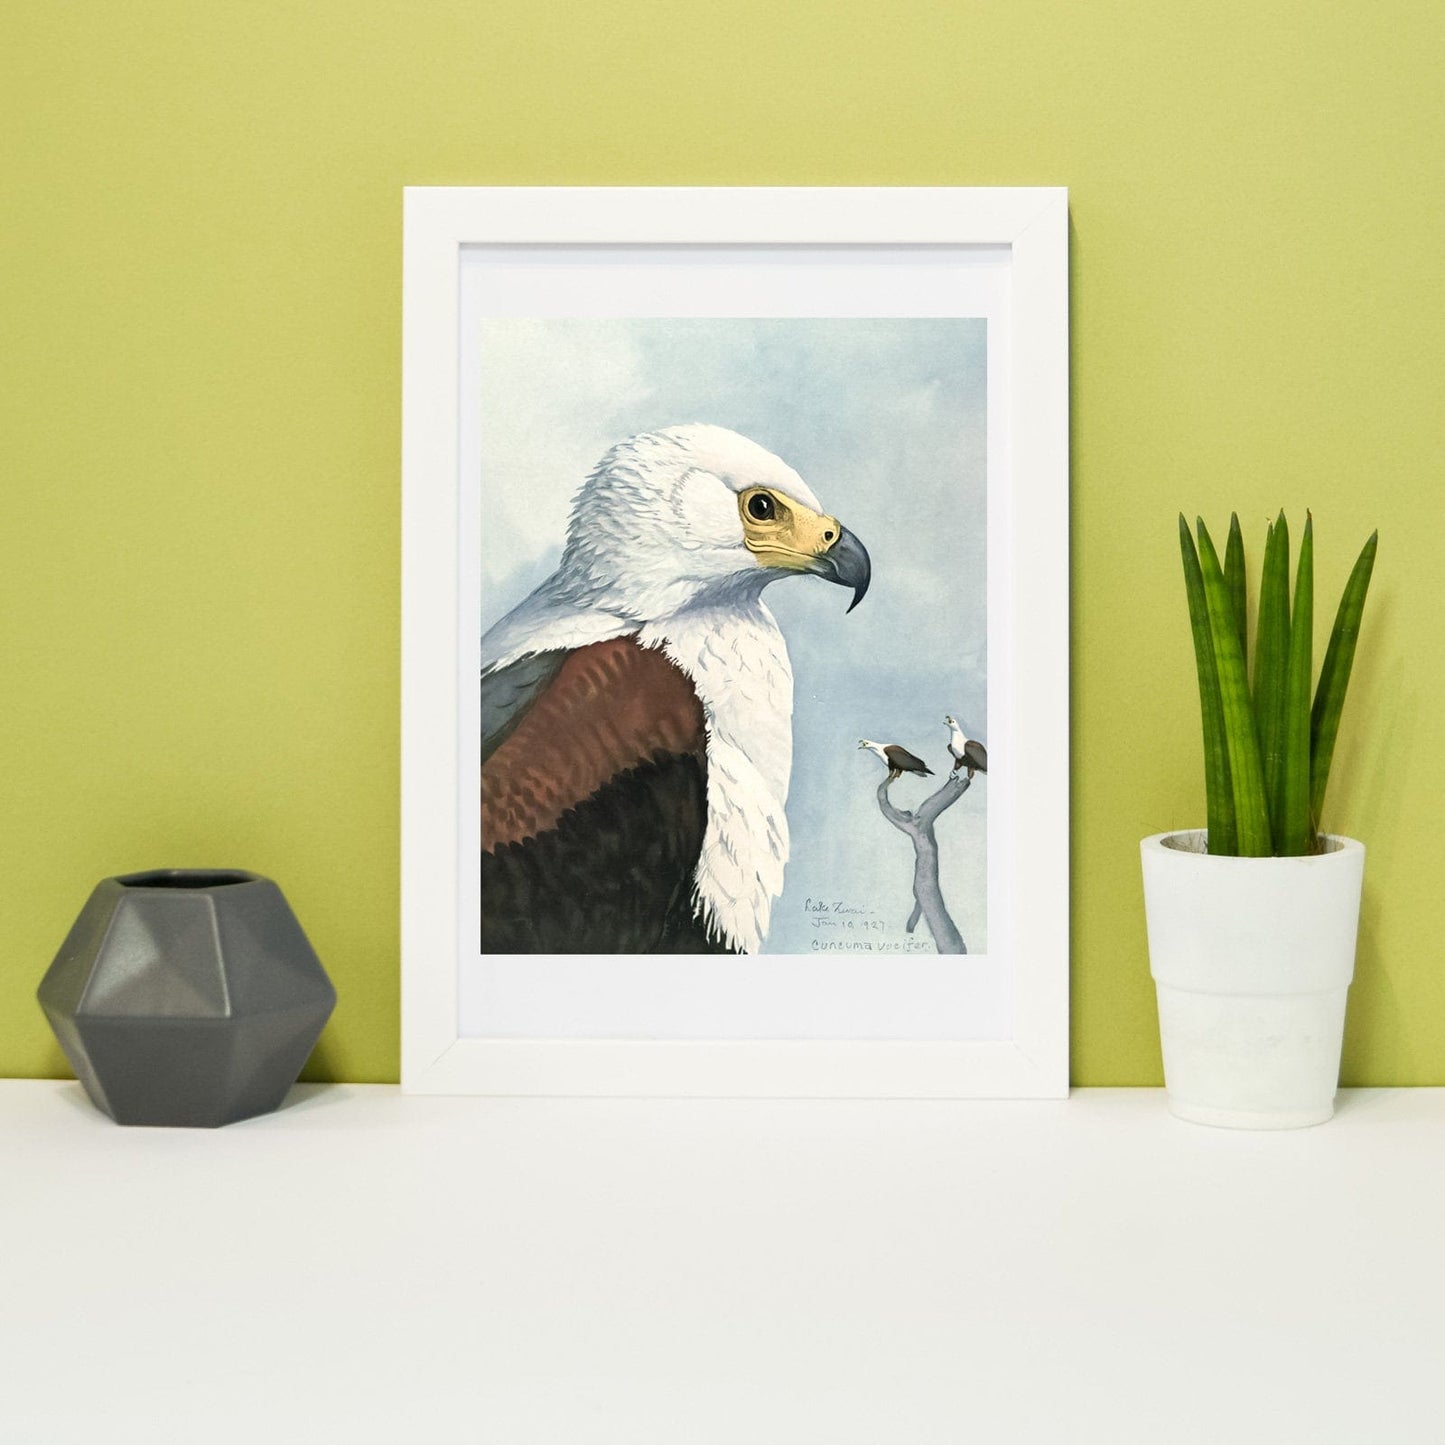 Framed Bird Print, Natural history bird art eagle print Vintage Animal Prints